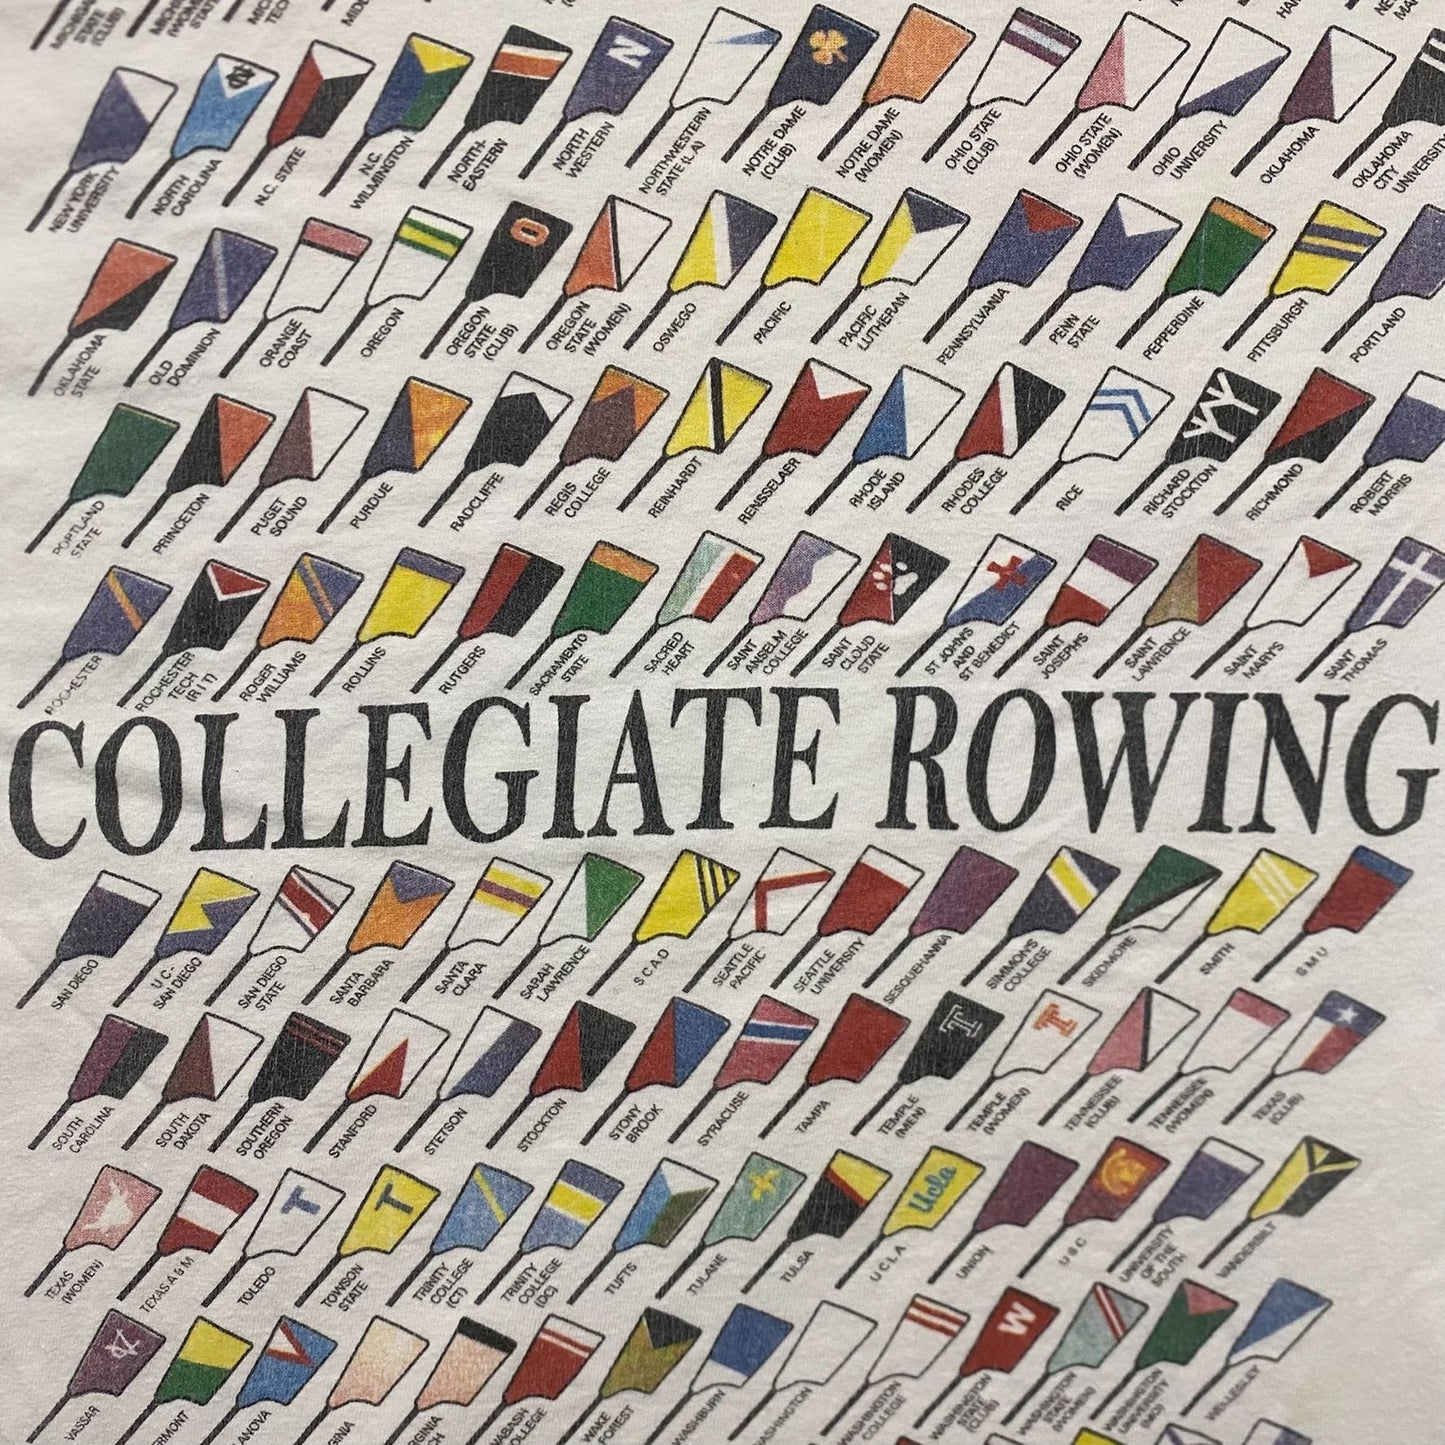 Vintage 90s University Rowing Essential College Sports Tee